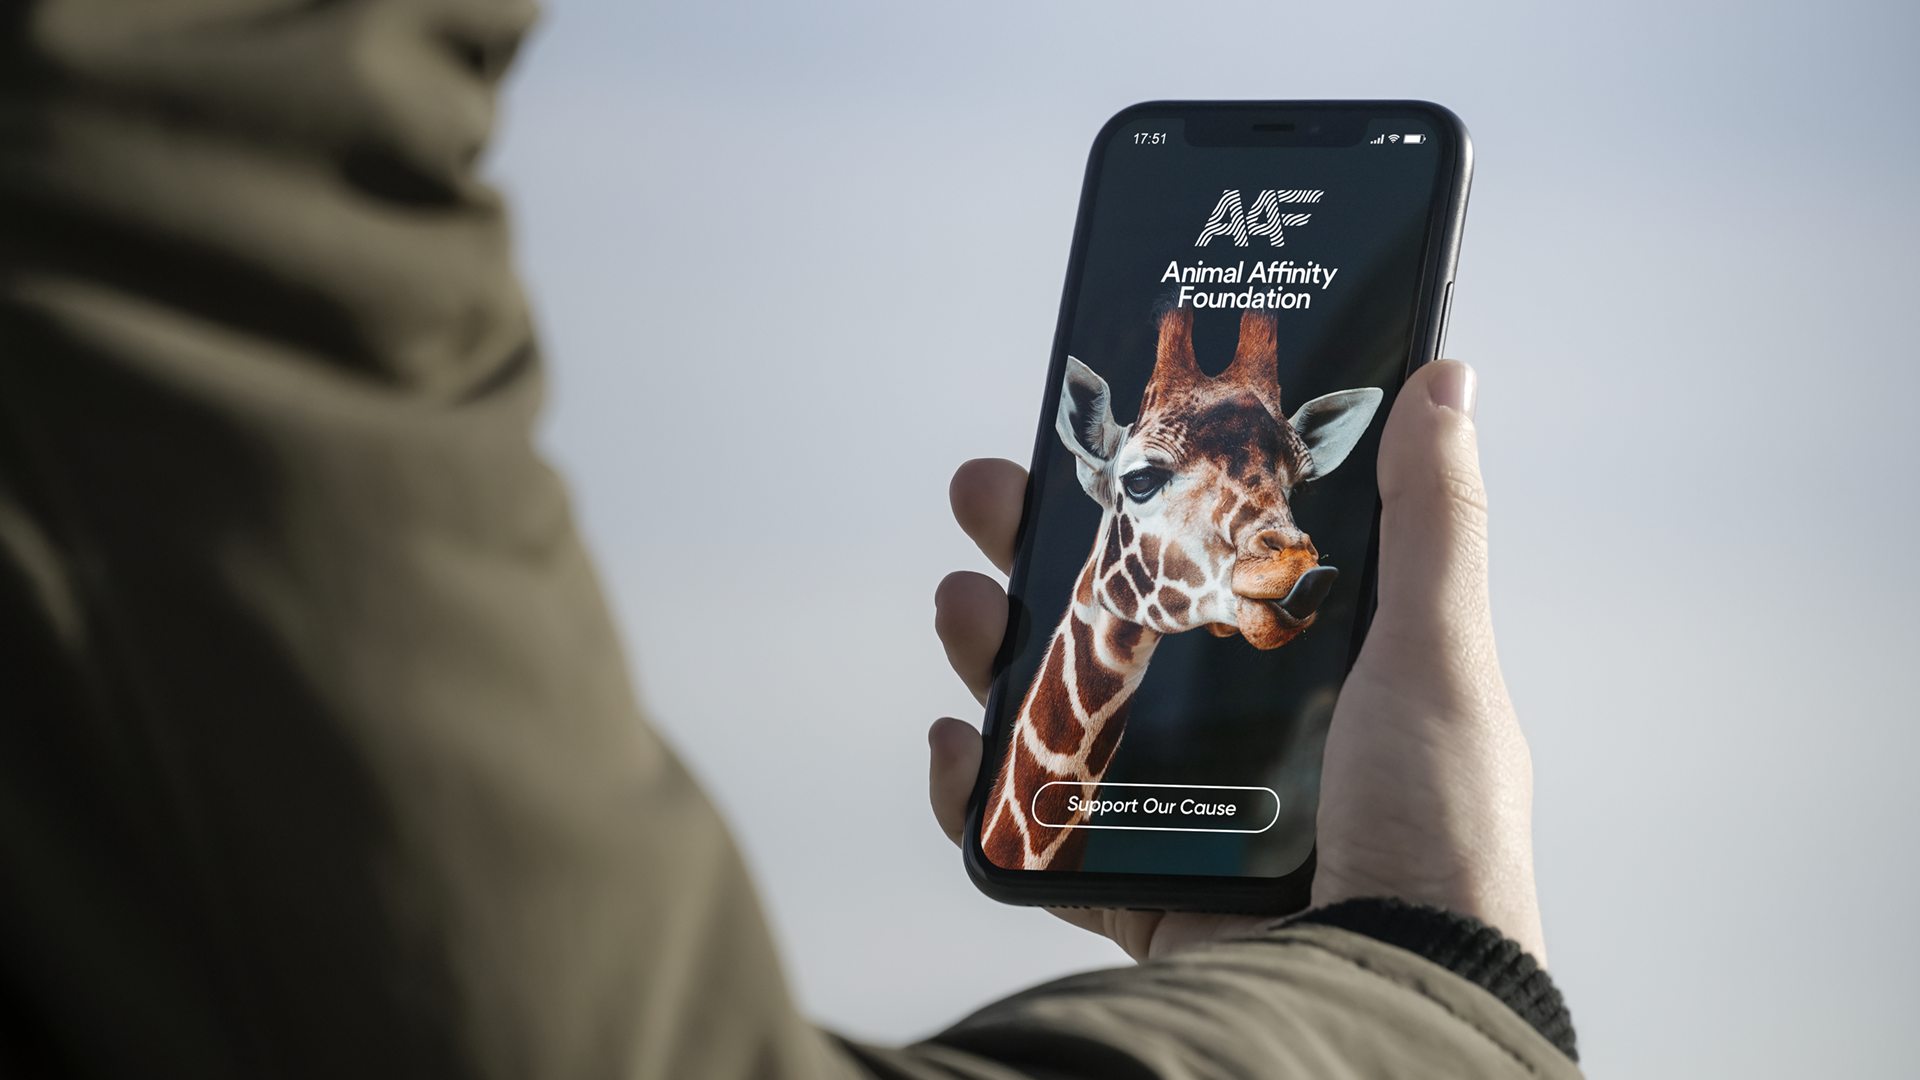 Animal Affinity brand design over a giraffe backdrop on a mobile display.